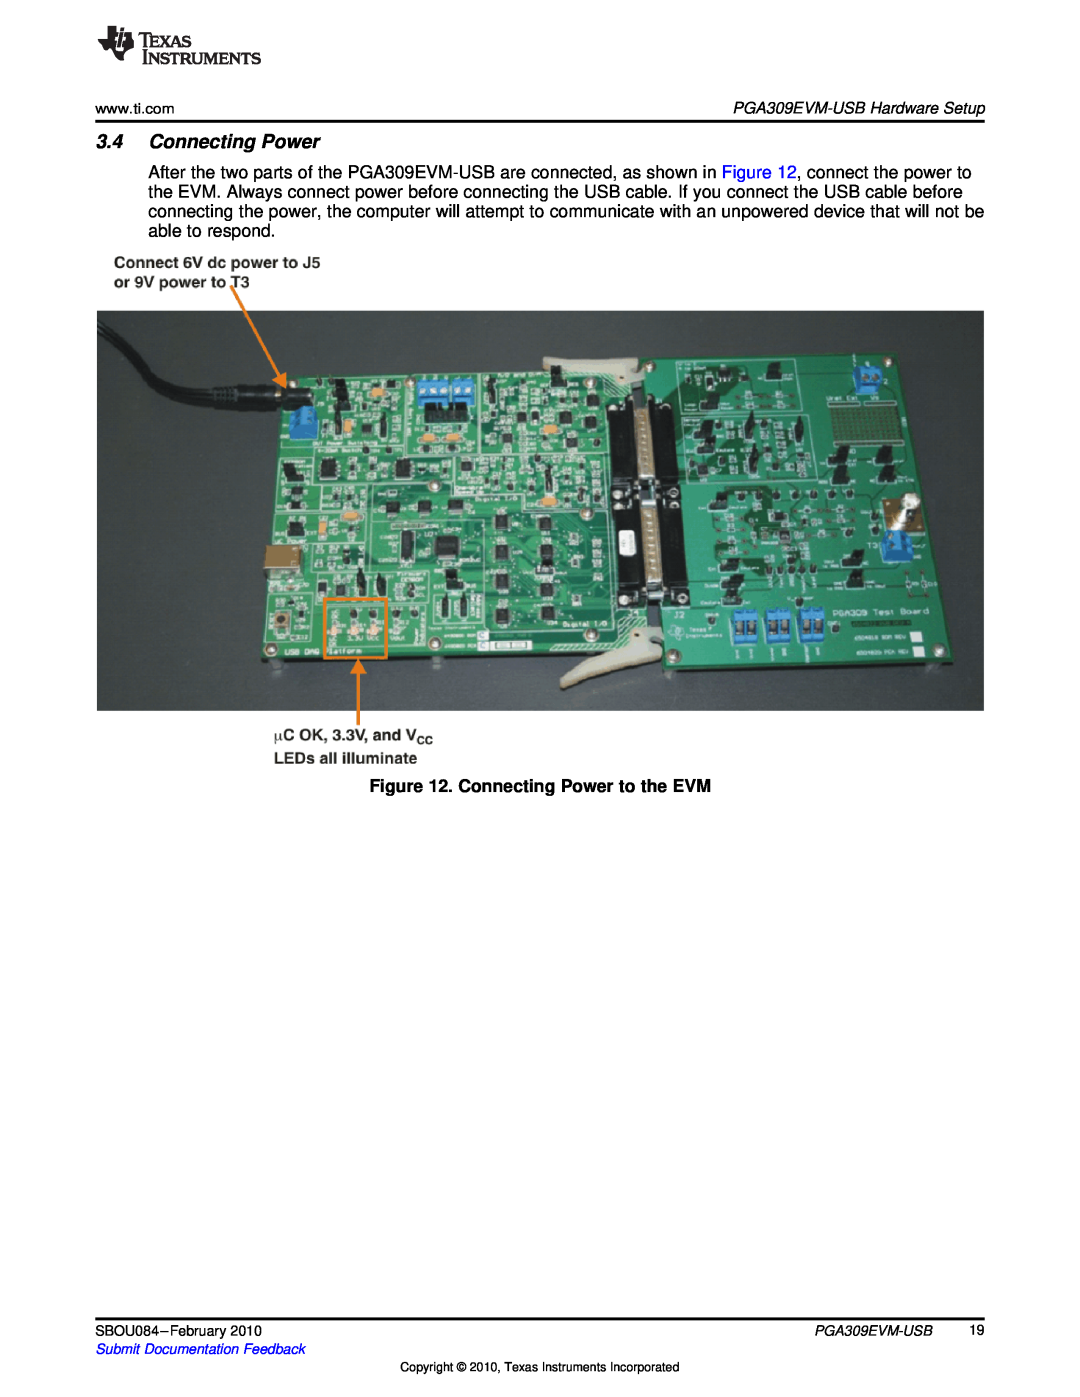 Texas Instruments PGA309EVM-USB manual Connecting Power to the EVM 